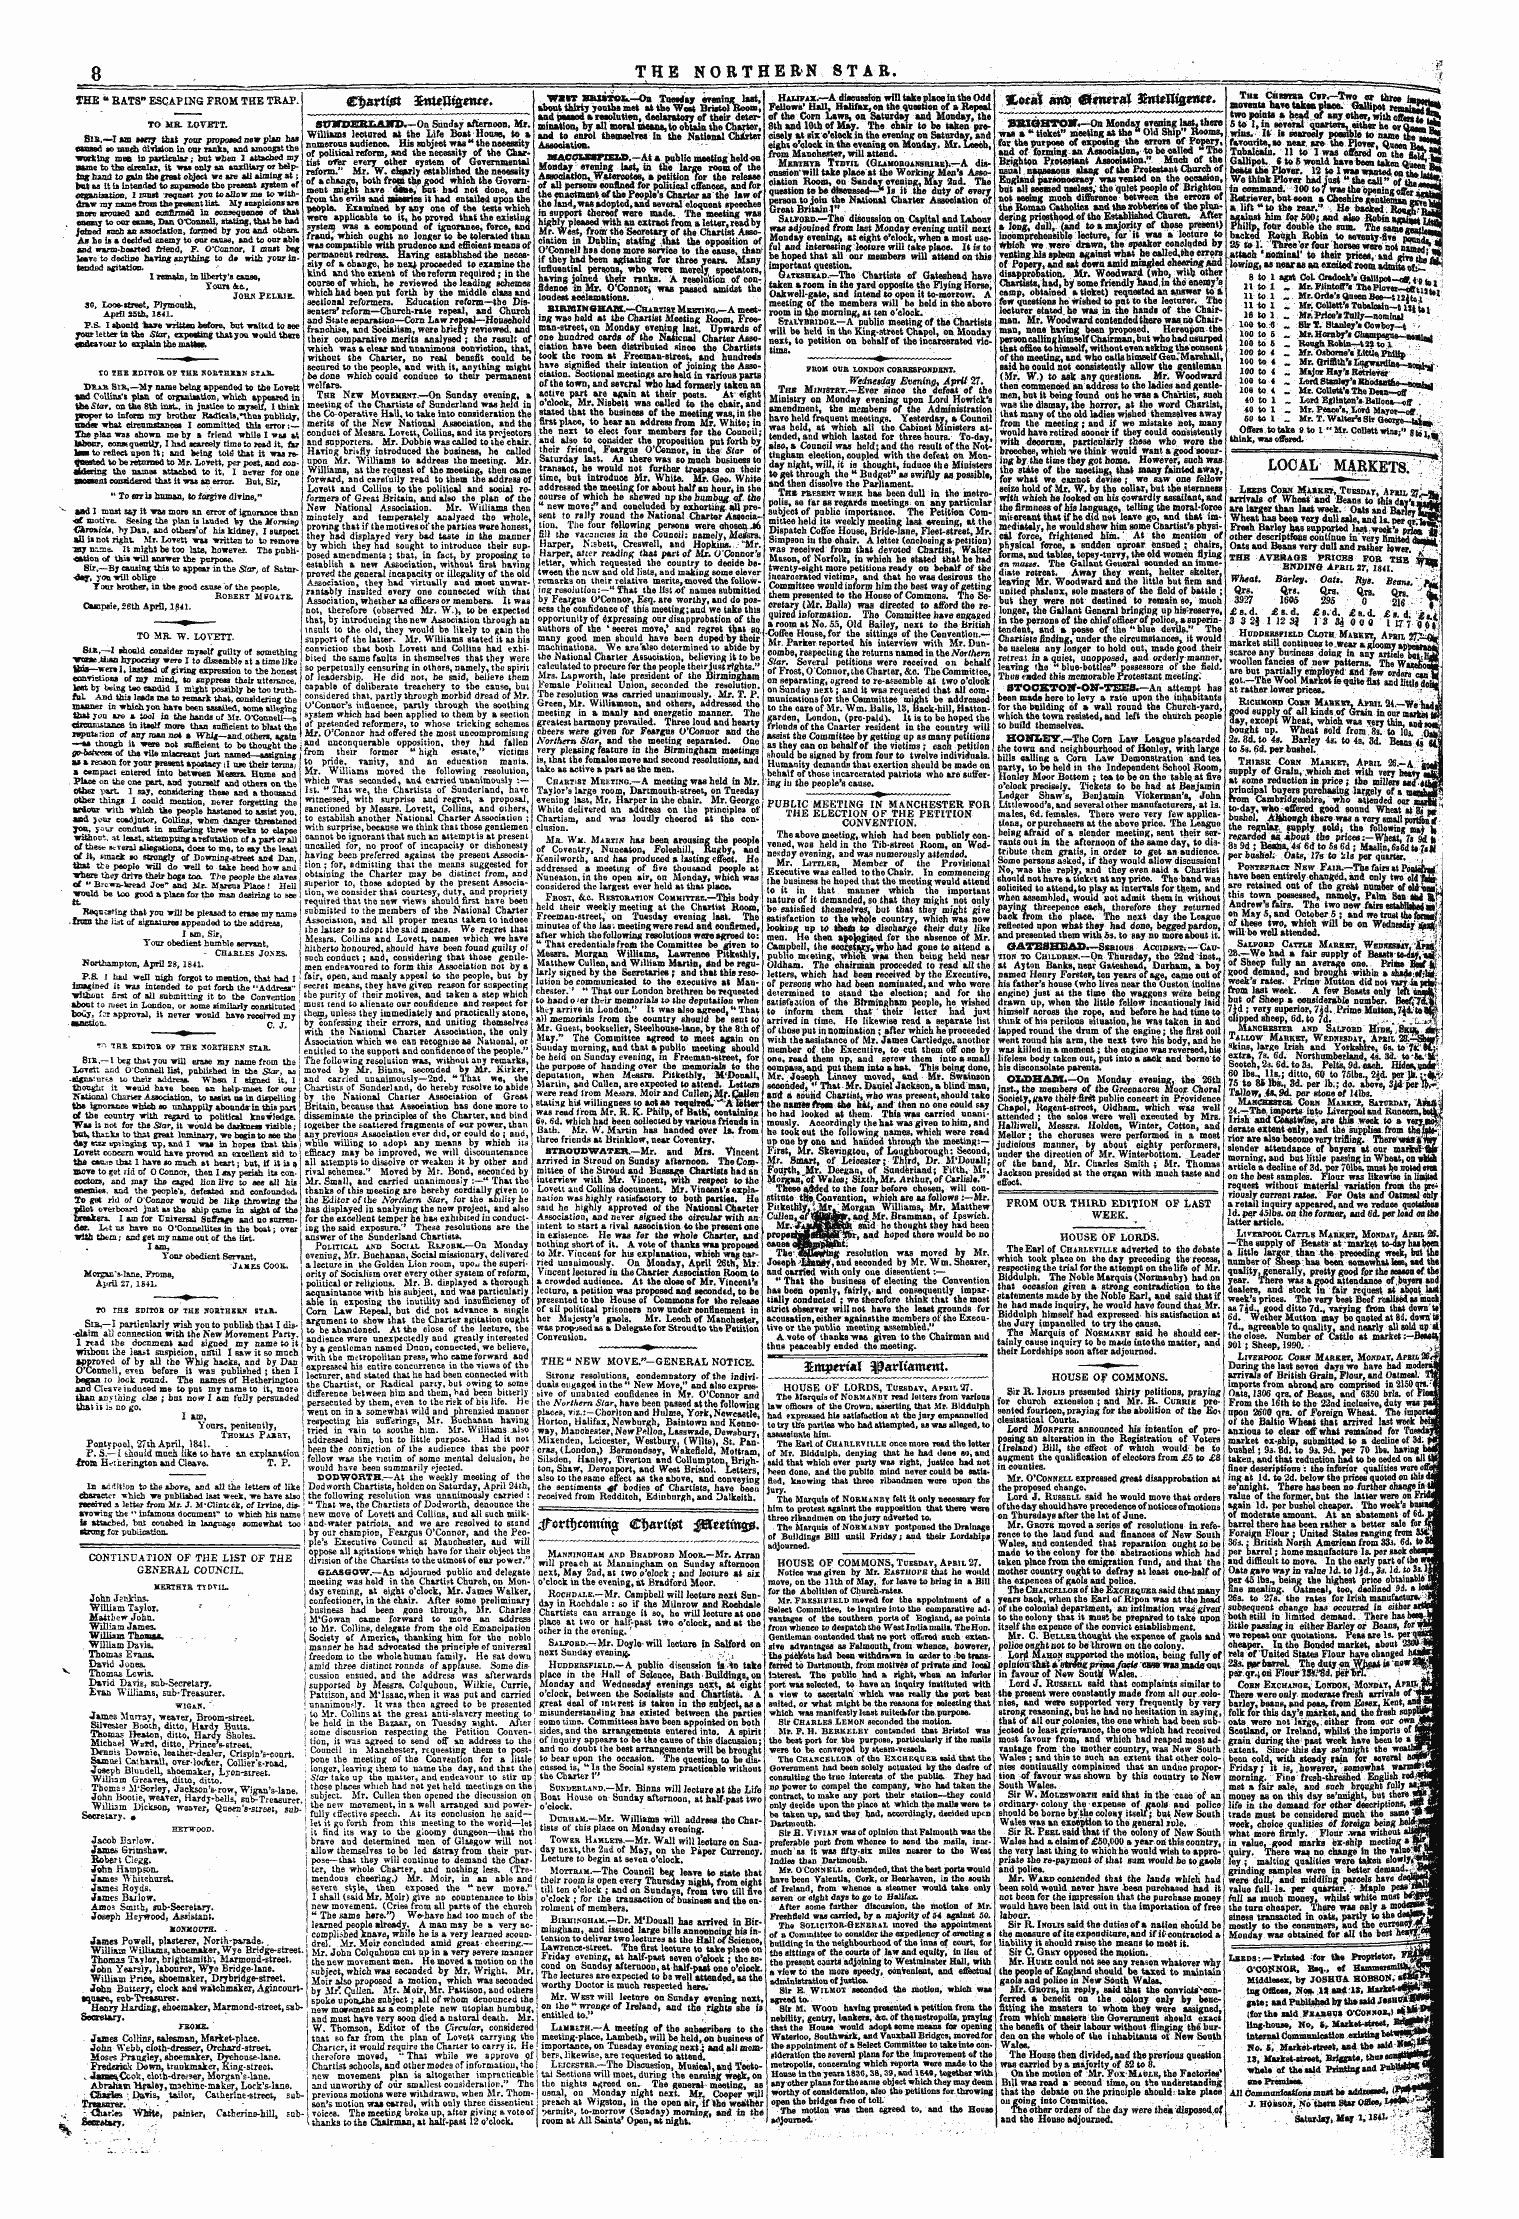 Northern Star (1837-1852): jS F Y, 1st edition - €$Srtt0t Zinittliqmte.